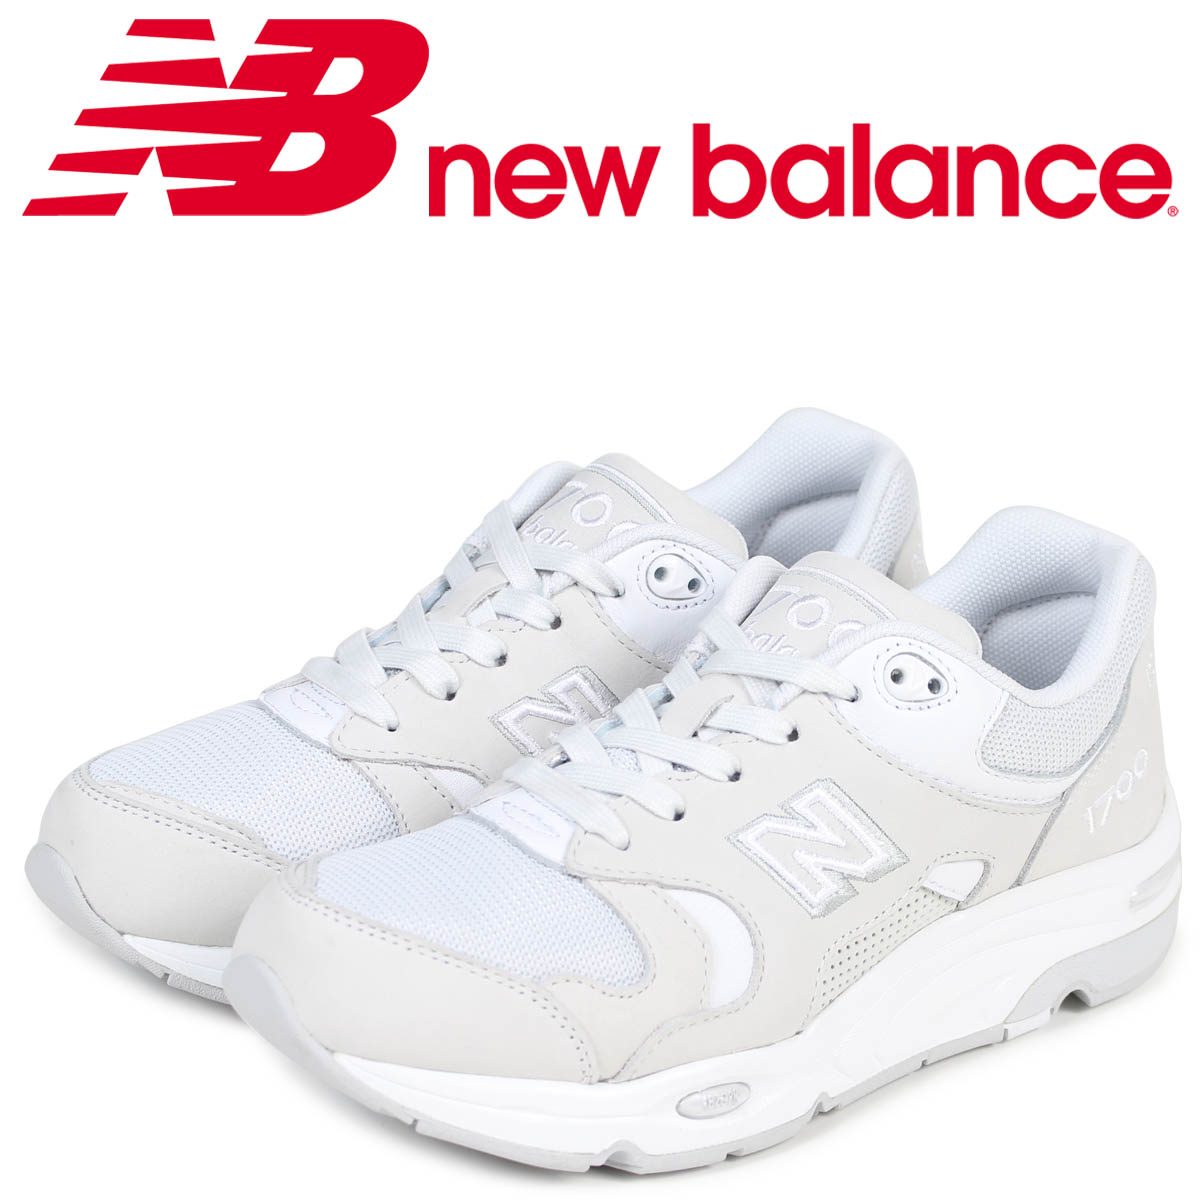 new balance men's 1700 walking shoe